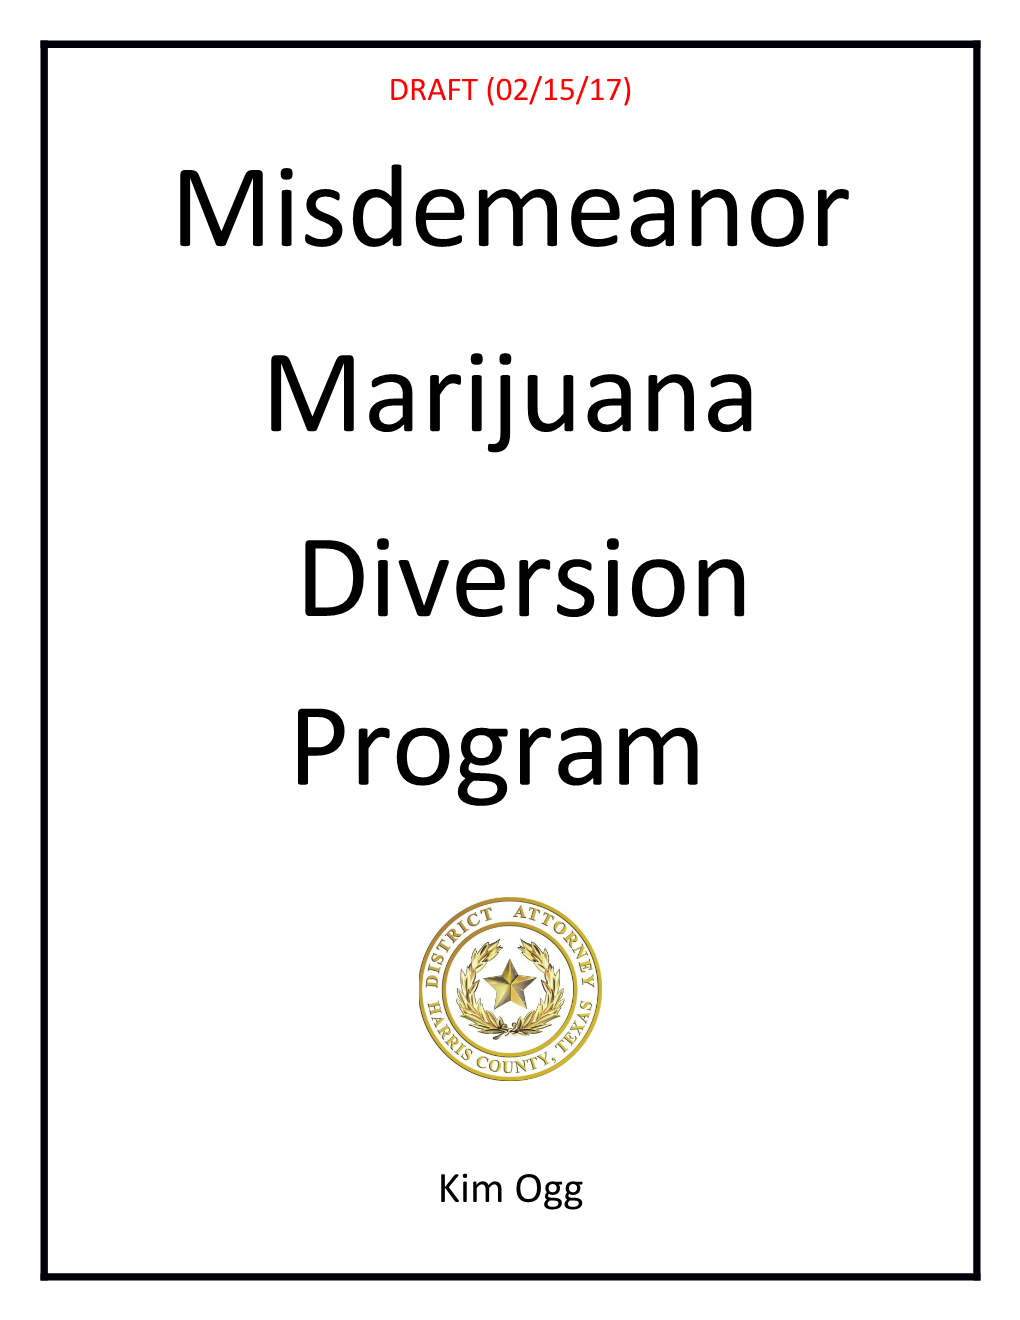 Misdemeanor Marijuanadiversion Program (Mmdp)